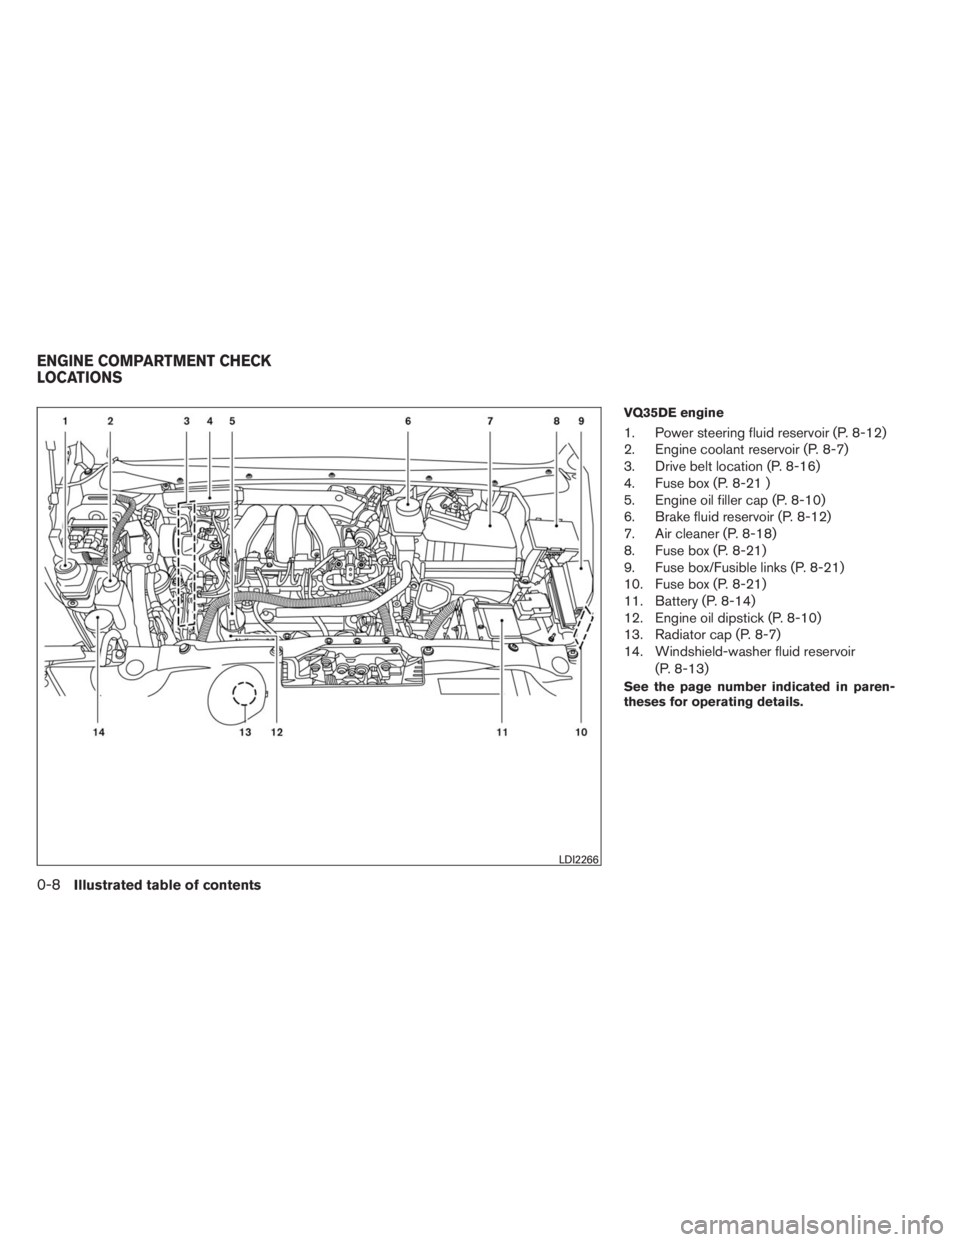 INFINITI QX60 HYBRID 2014  Owners Manual VQ35DE engine
1. Power steering fluid reservoir (P. 8-12)
2. Engine coolant reservoir (P. 8-7)
3. Drive belt location (P. 8-16)
4. Fuse box (P. 8-21 )
5. Engine oil filler cap (P. 8-10)
6. Brake fluid